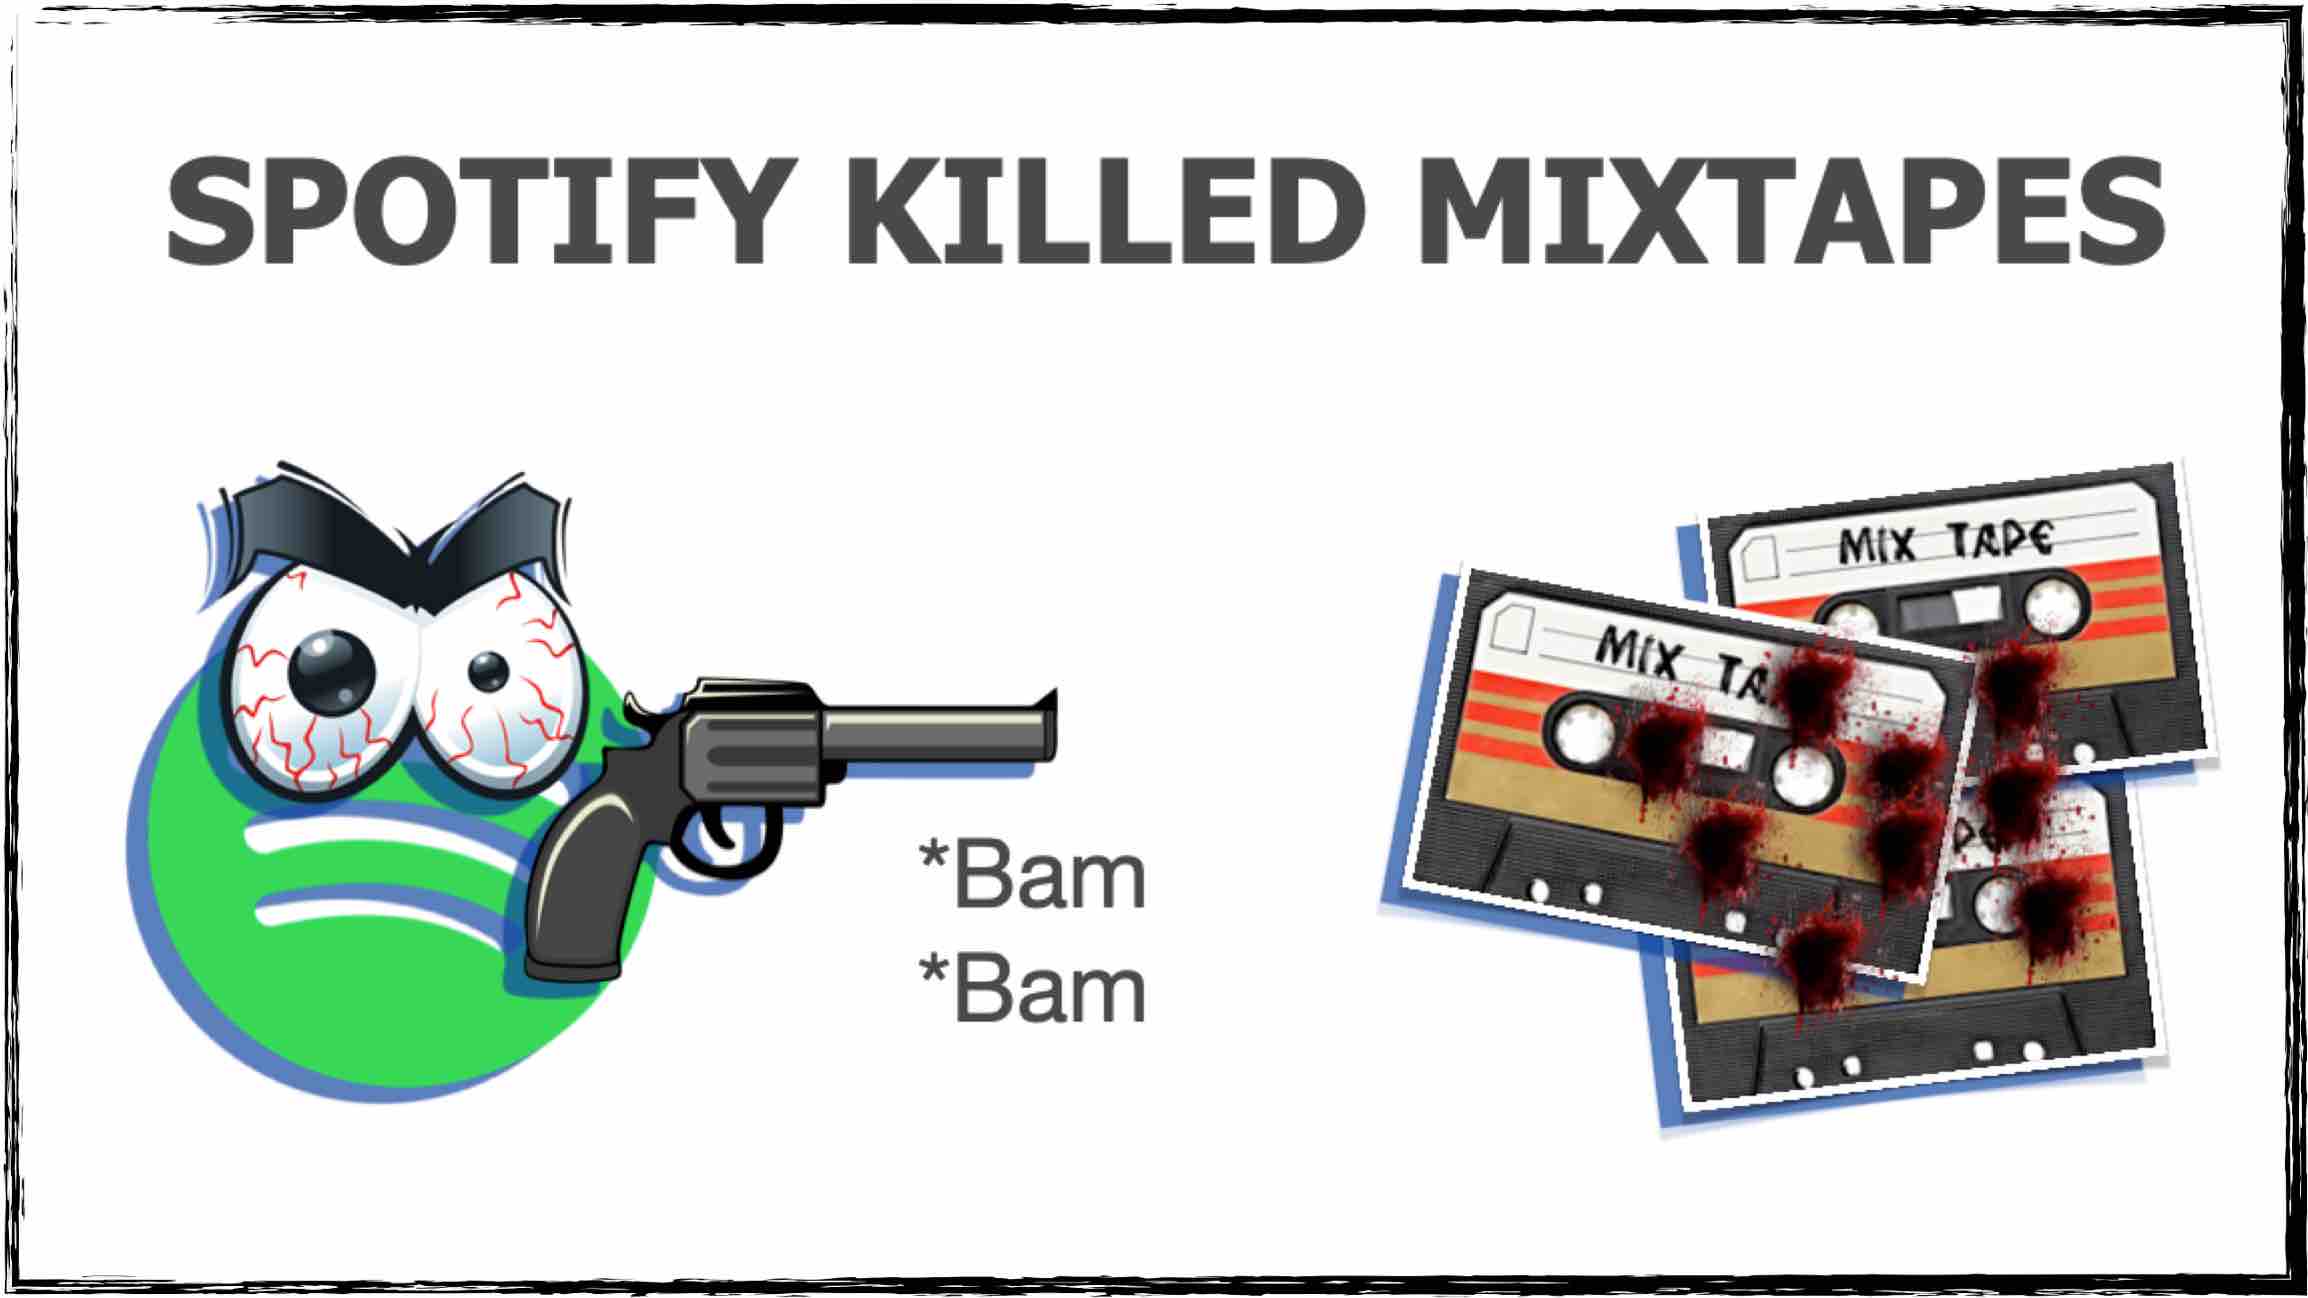 Spotify killed mixtapes